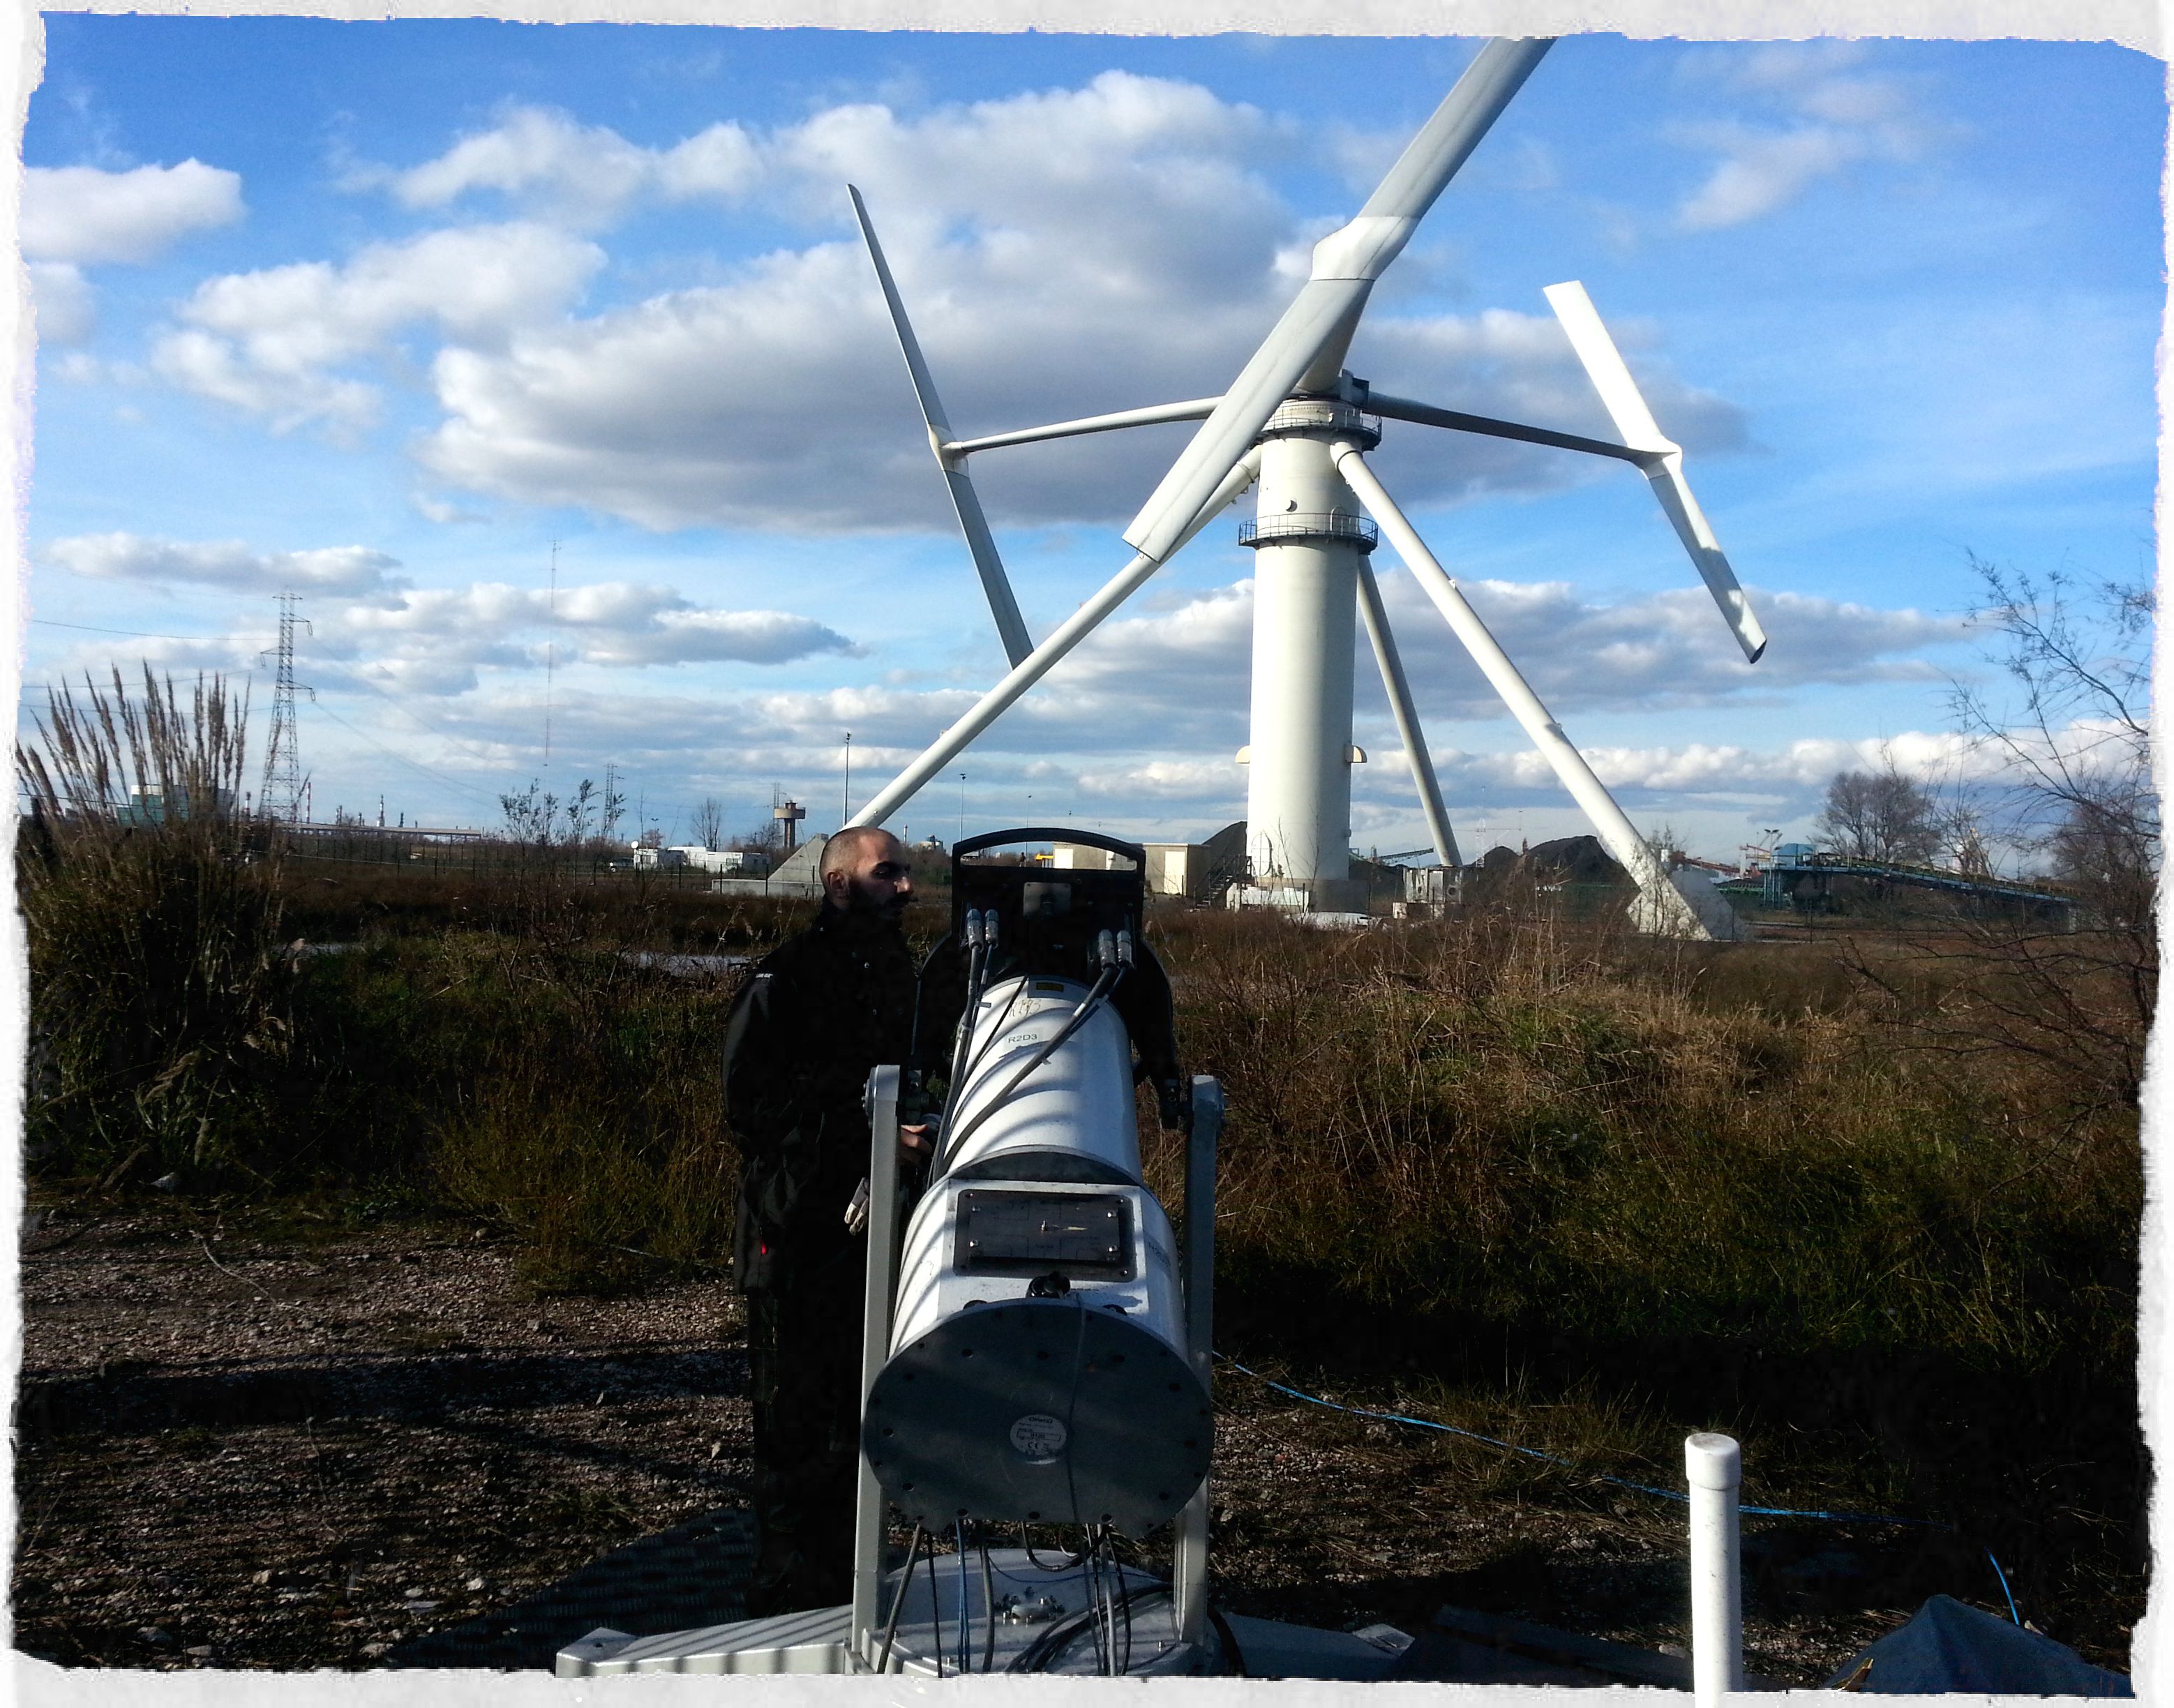 A lidar put up to test the wind turbine